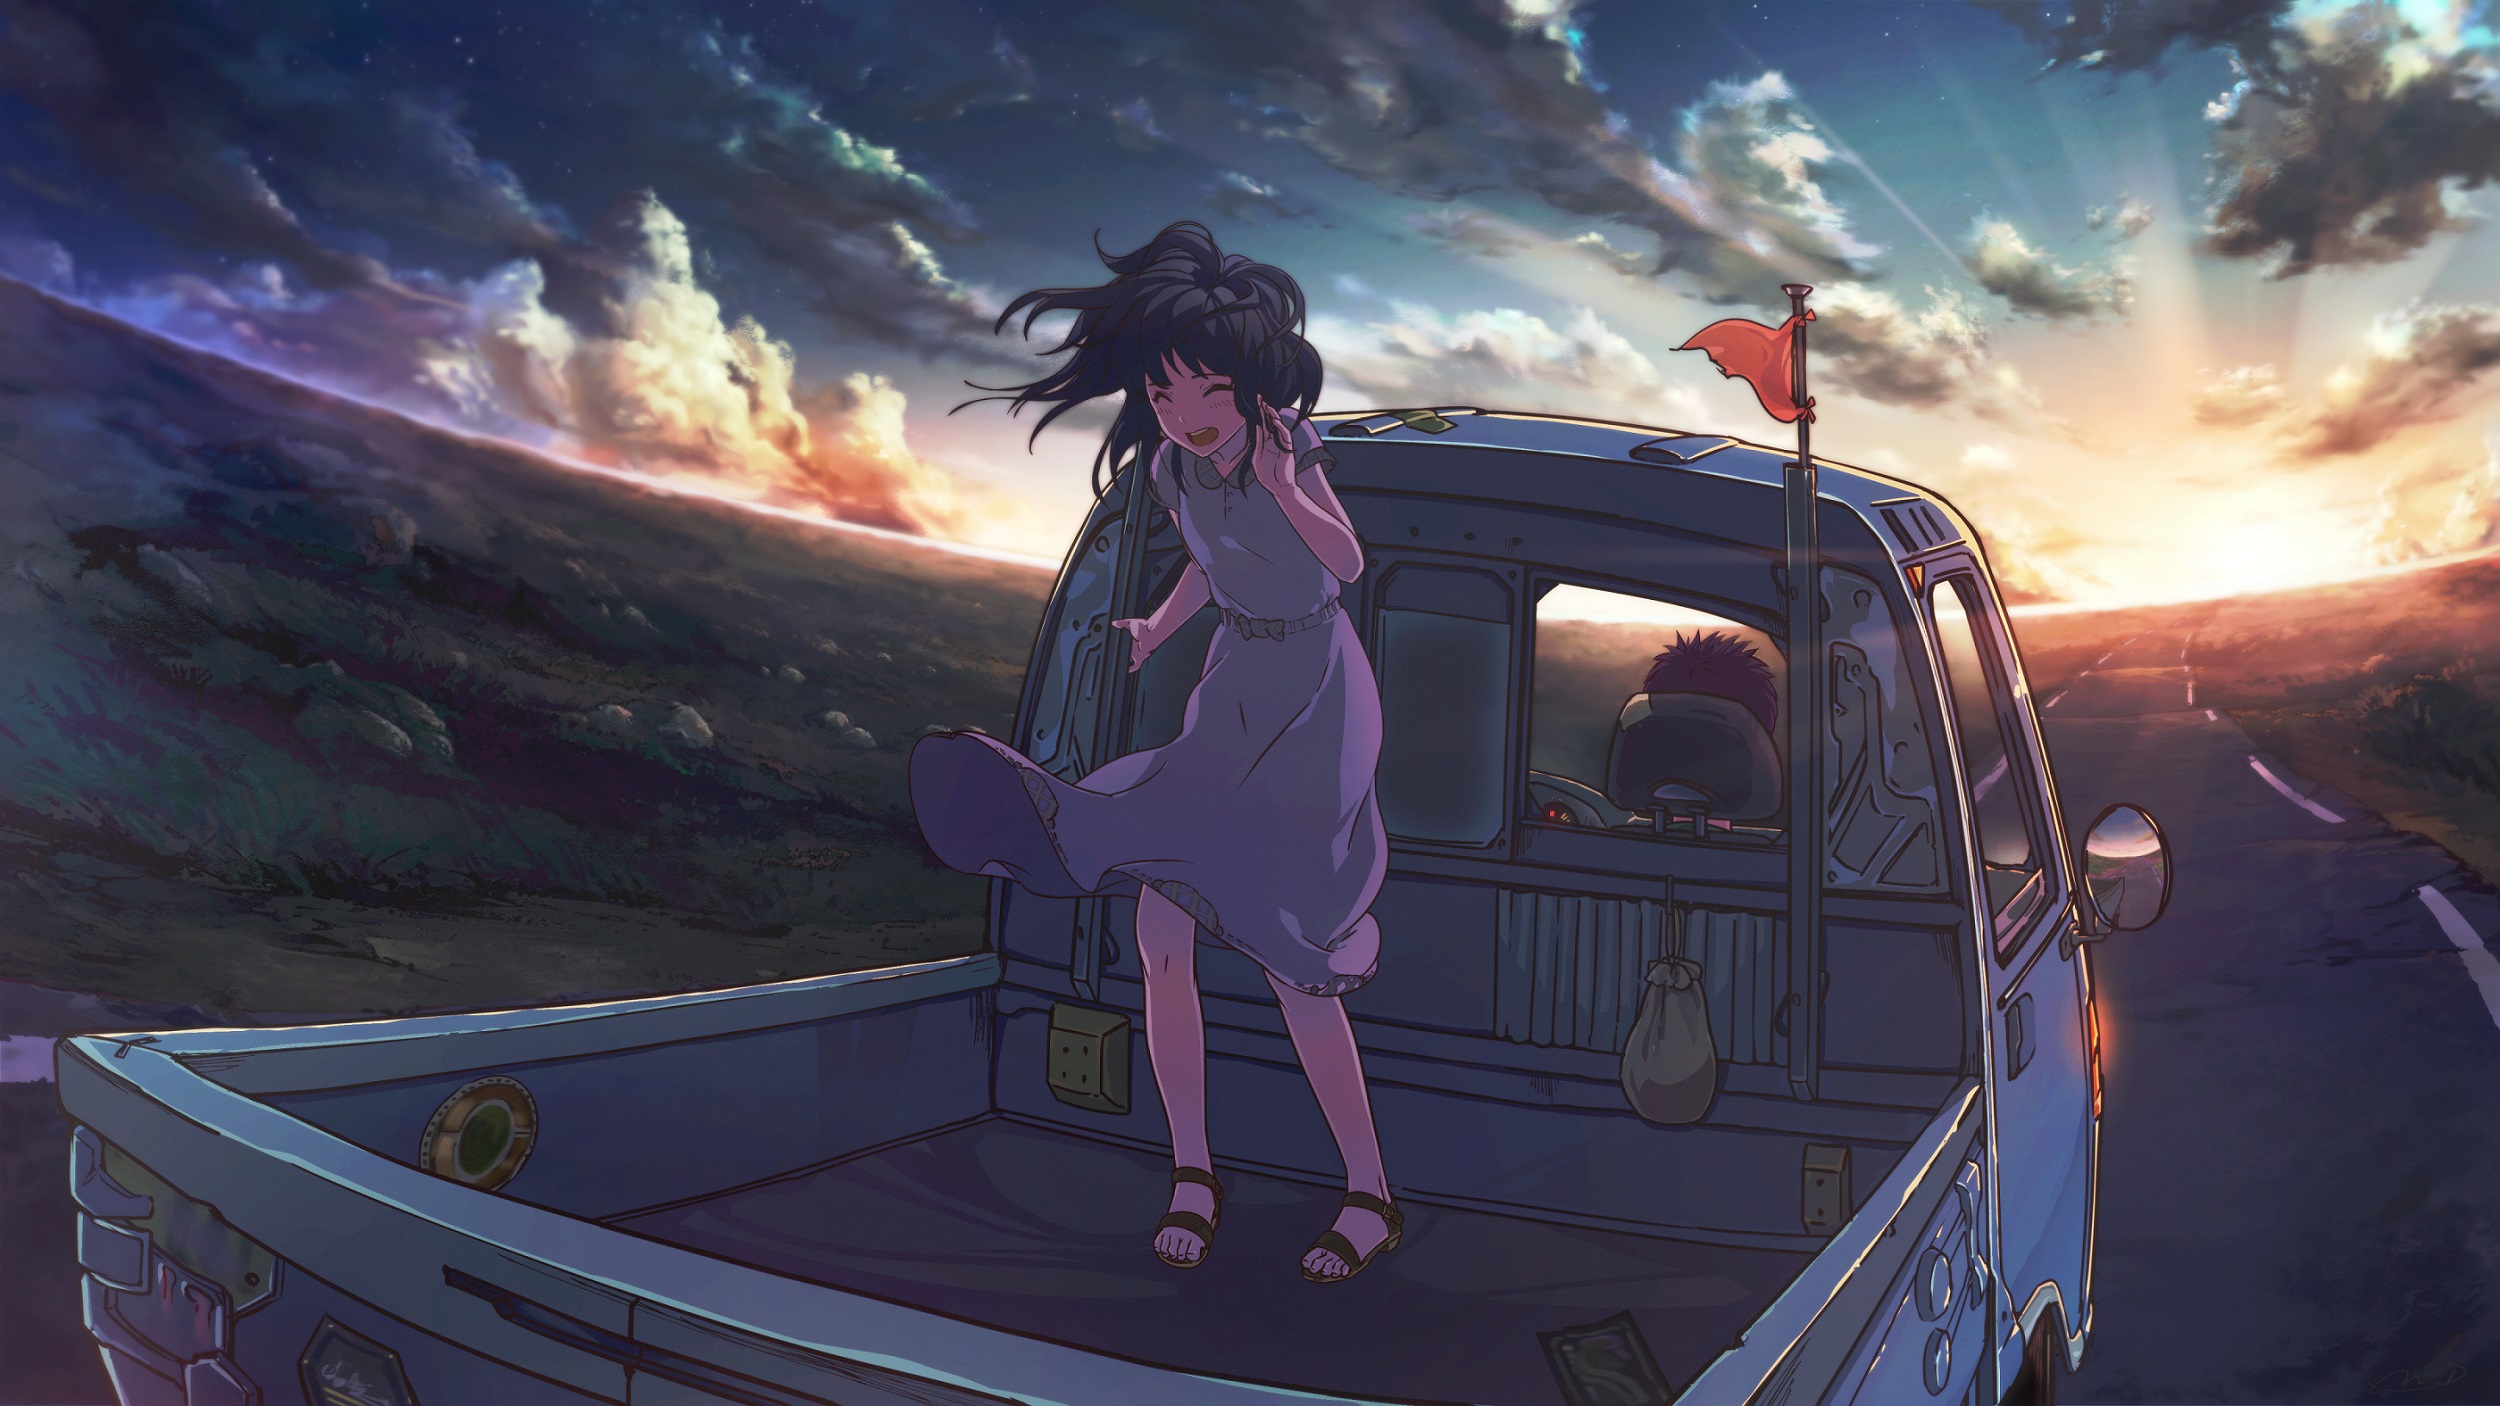 Anime 2500x1406 anime daybreak frontline car daybreak road anime girls vehicle sky clouds sunlight dress